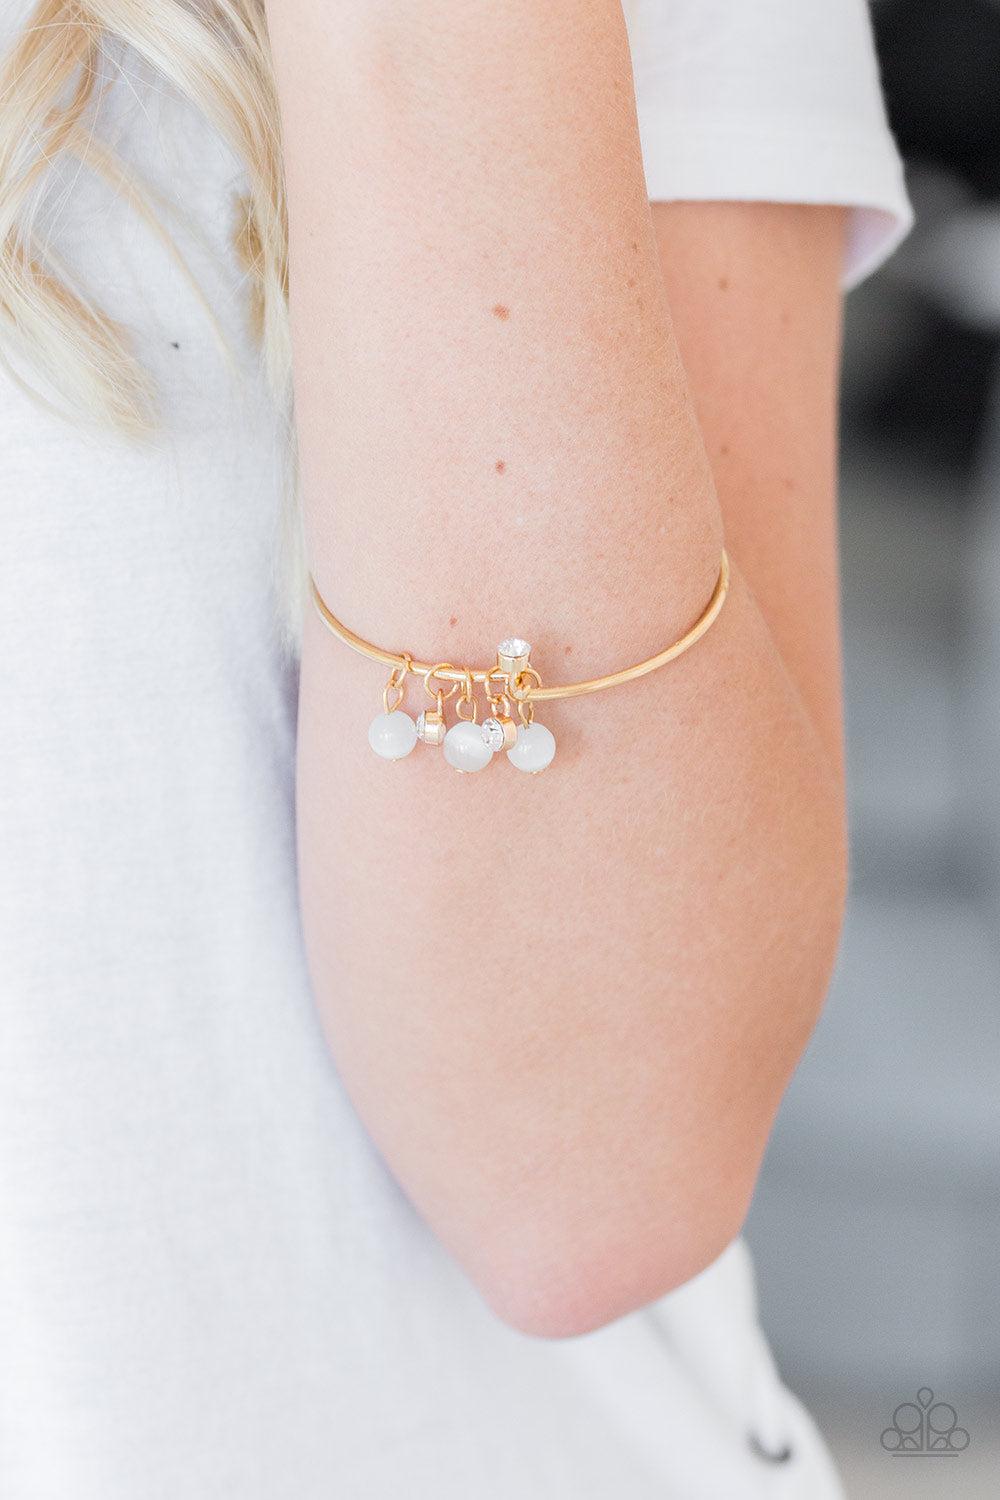 Marine Melody Gold Bracelet - Paparazzi Accessories- lightbox - CarasShop.com - $5 Jewelry by Cara Jewels